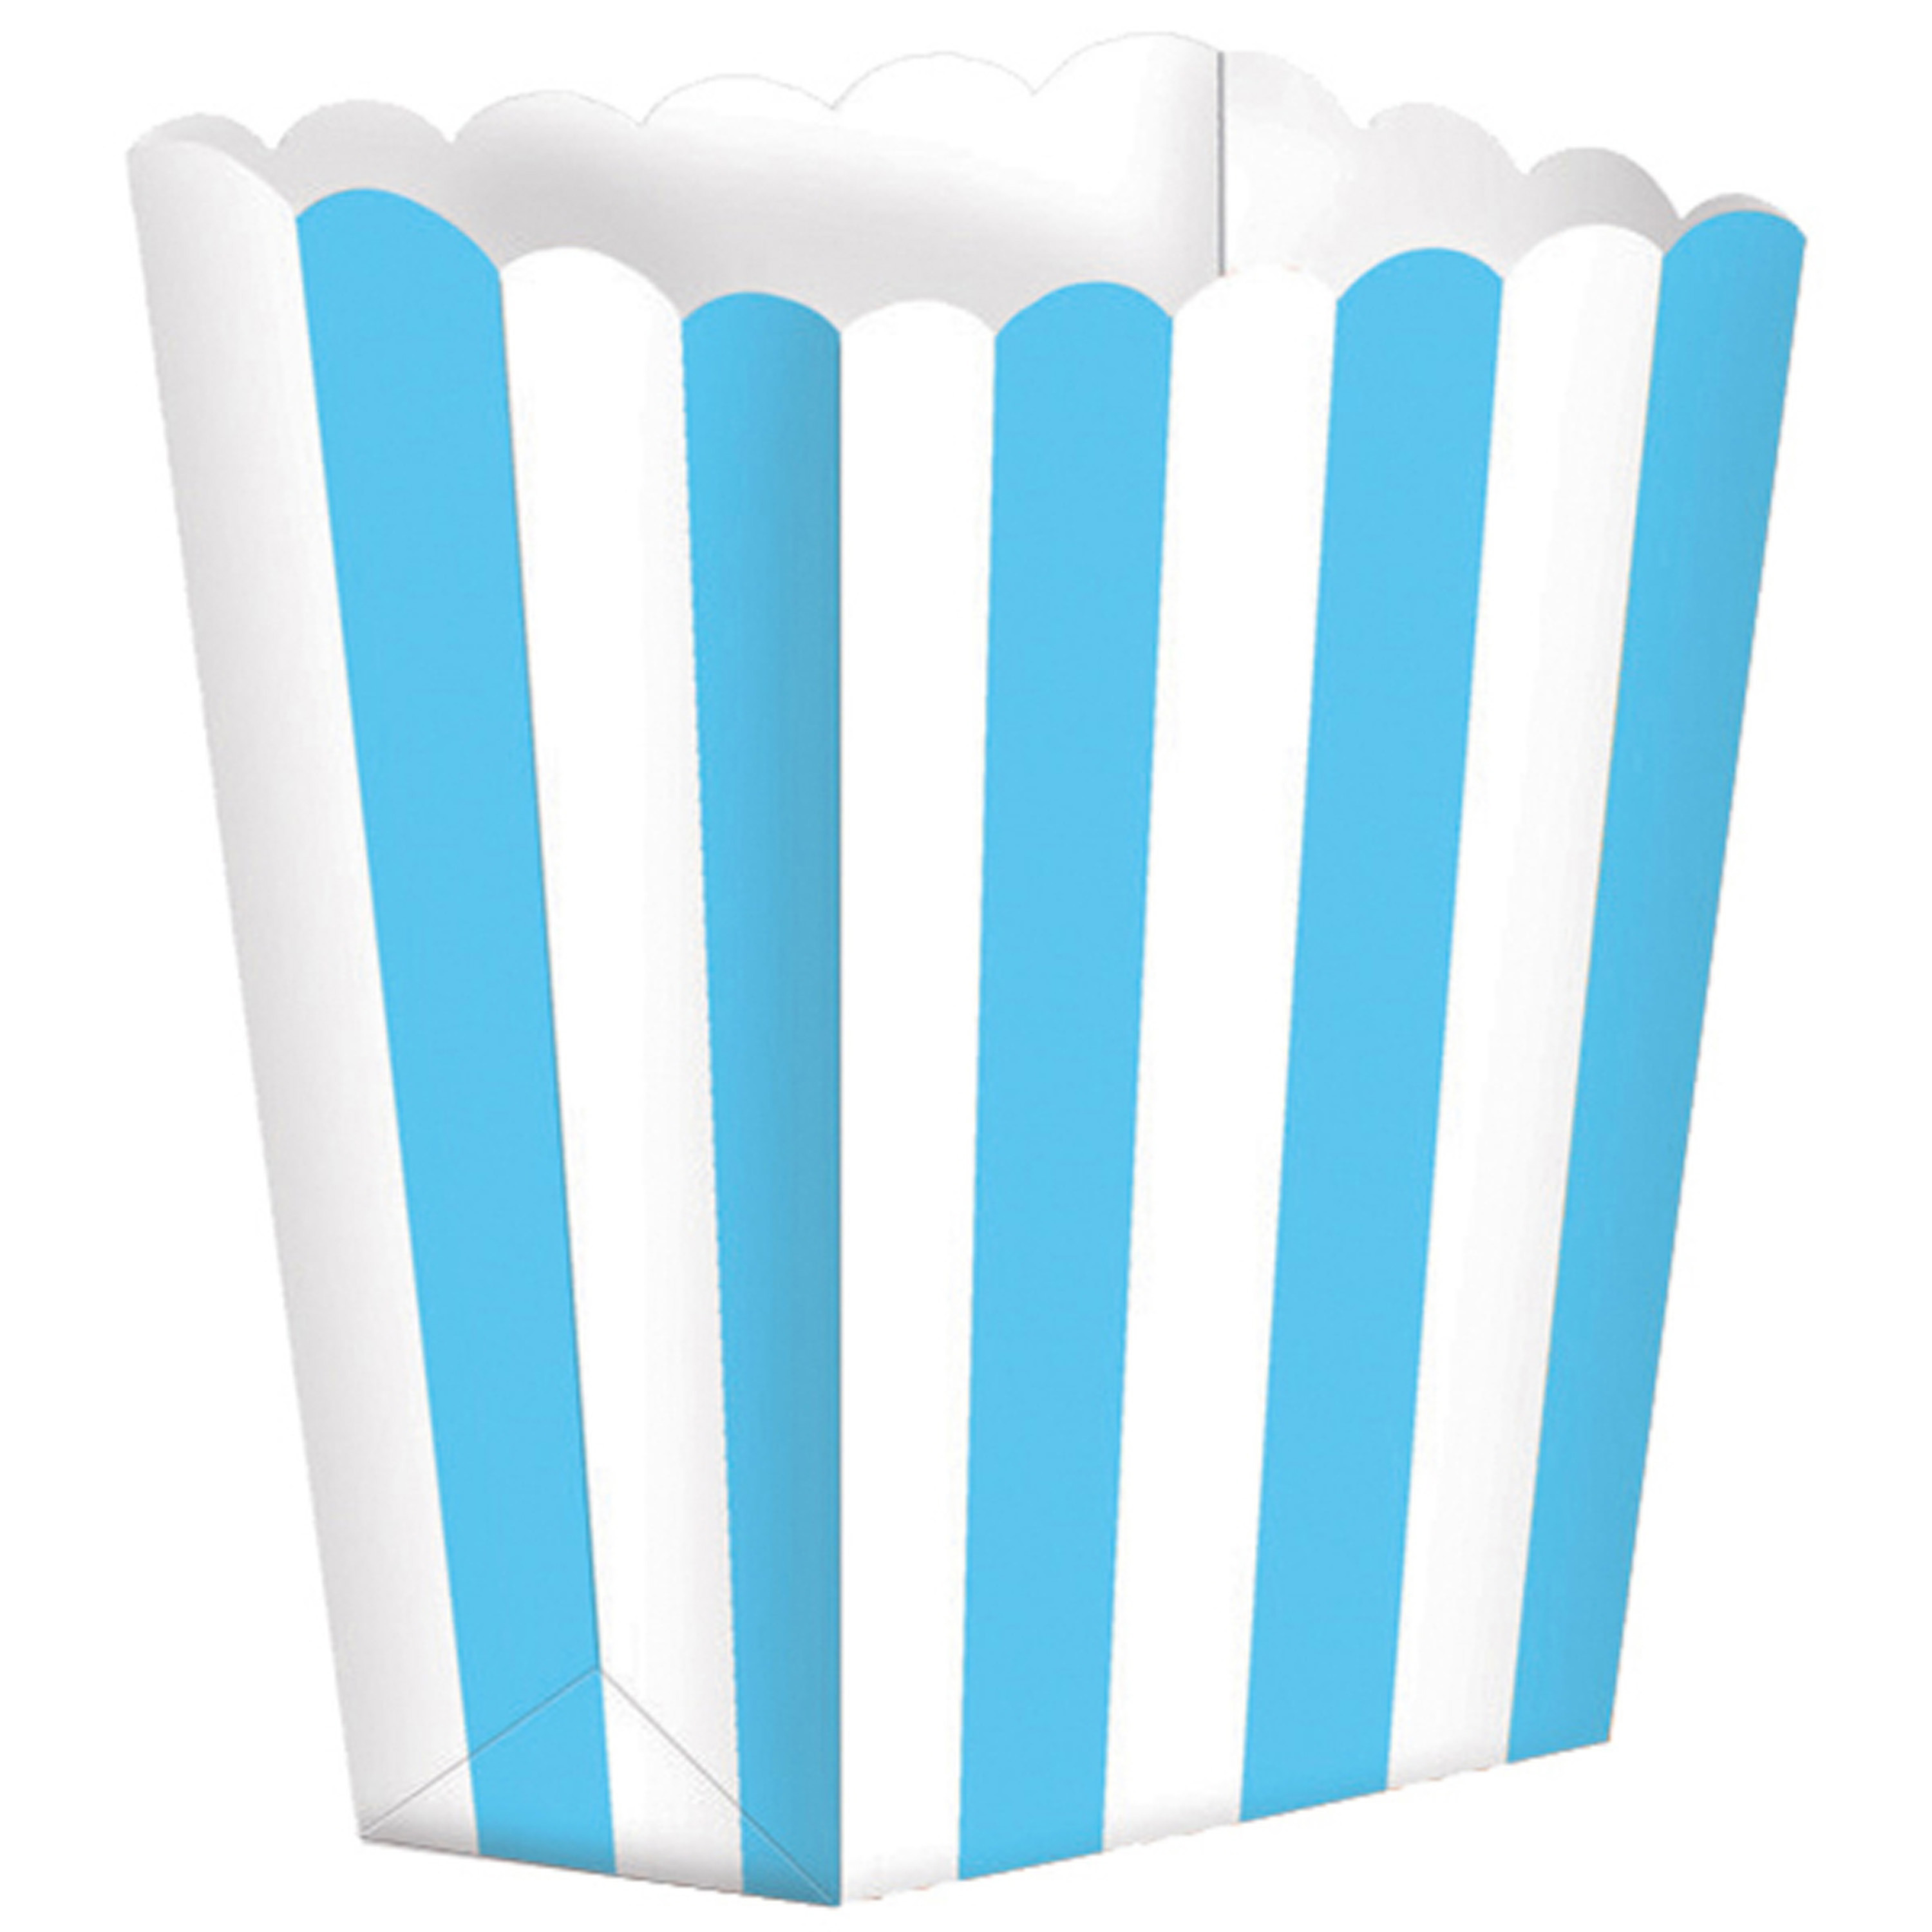 5x stuks Popcorn-snoep bakjes licht blauw-wit